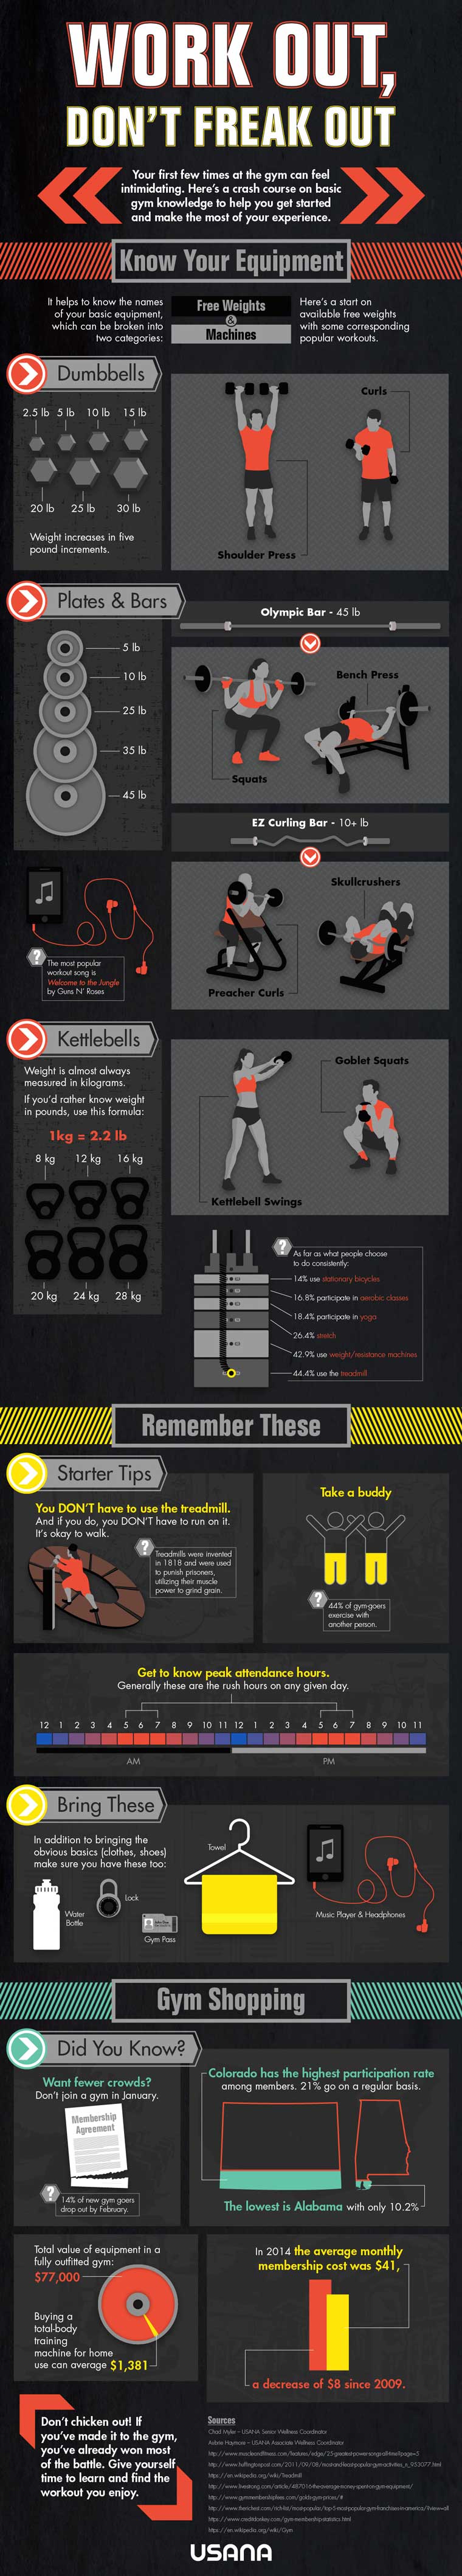 Gym-beginner-infographic-760